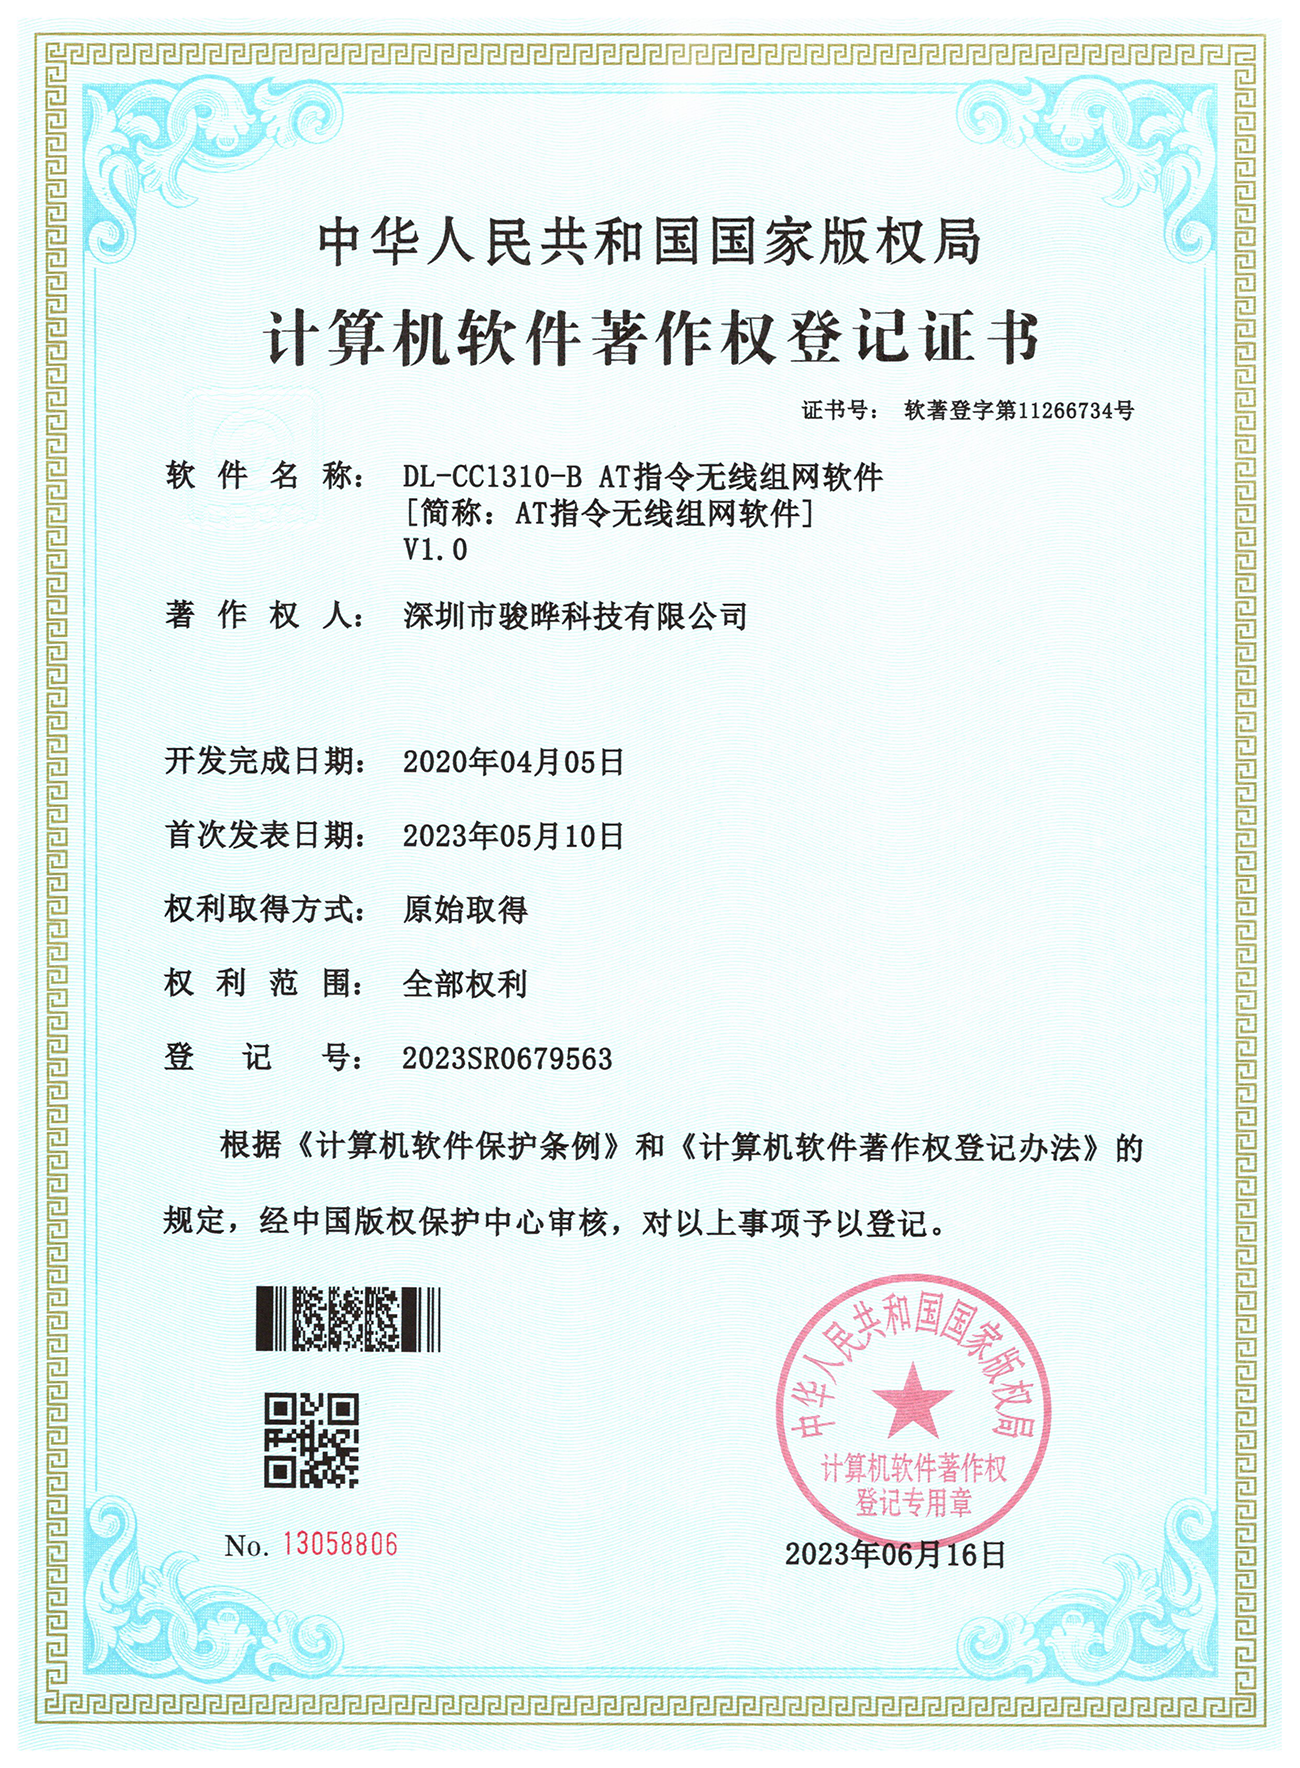 Software Patent Certificate of DL-CC1310-B RF module